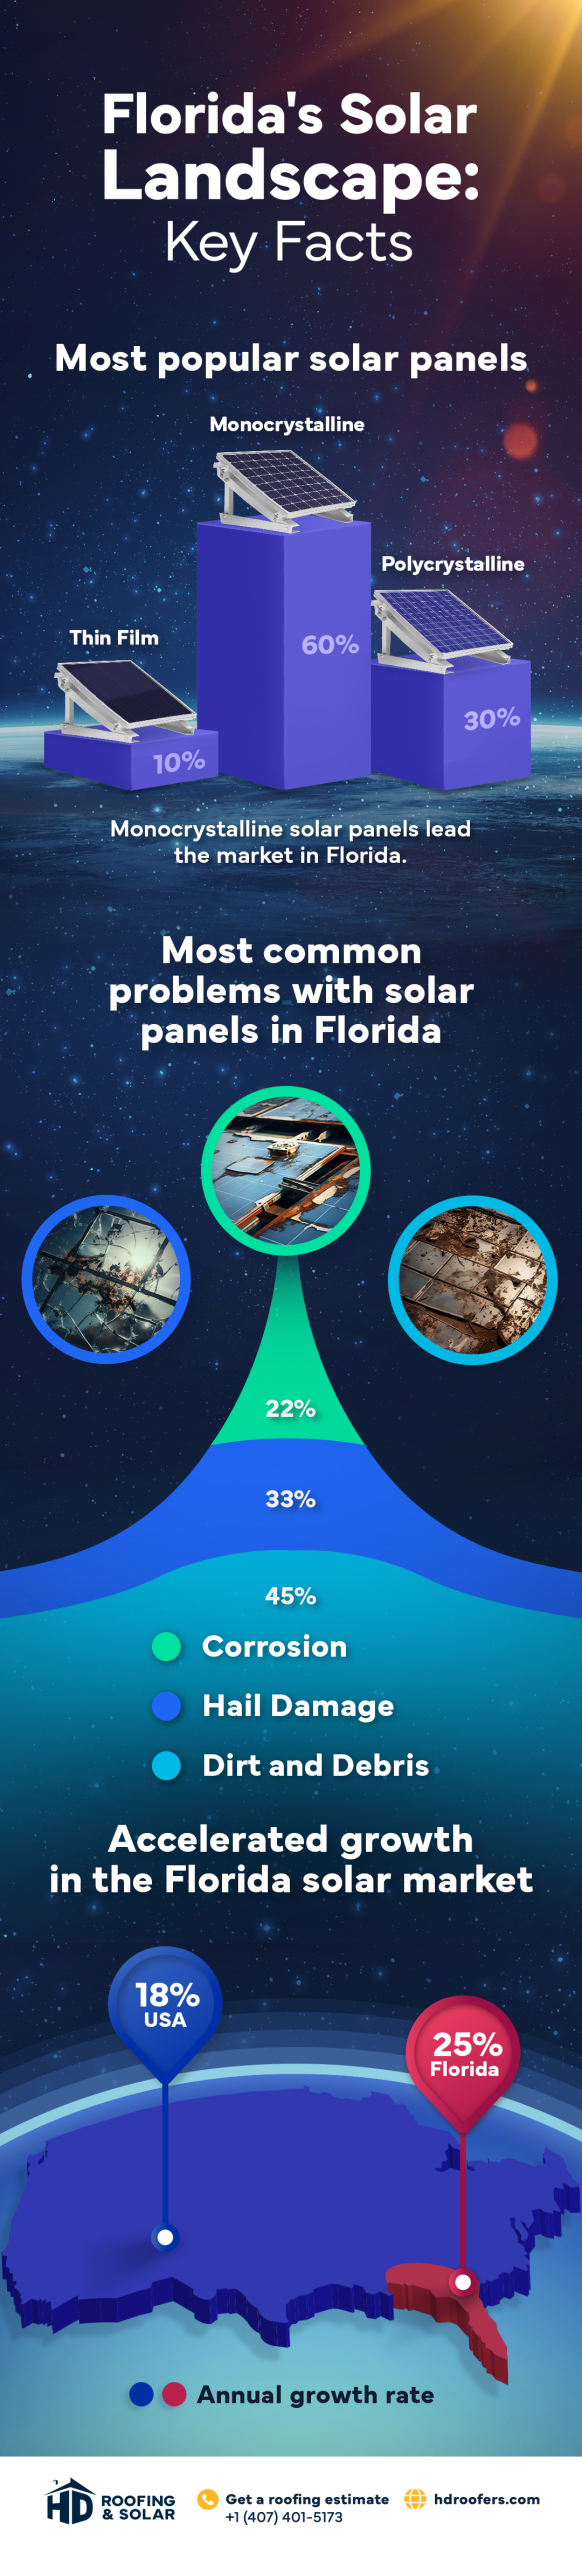 Why monocrystalline solar panels in Florida